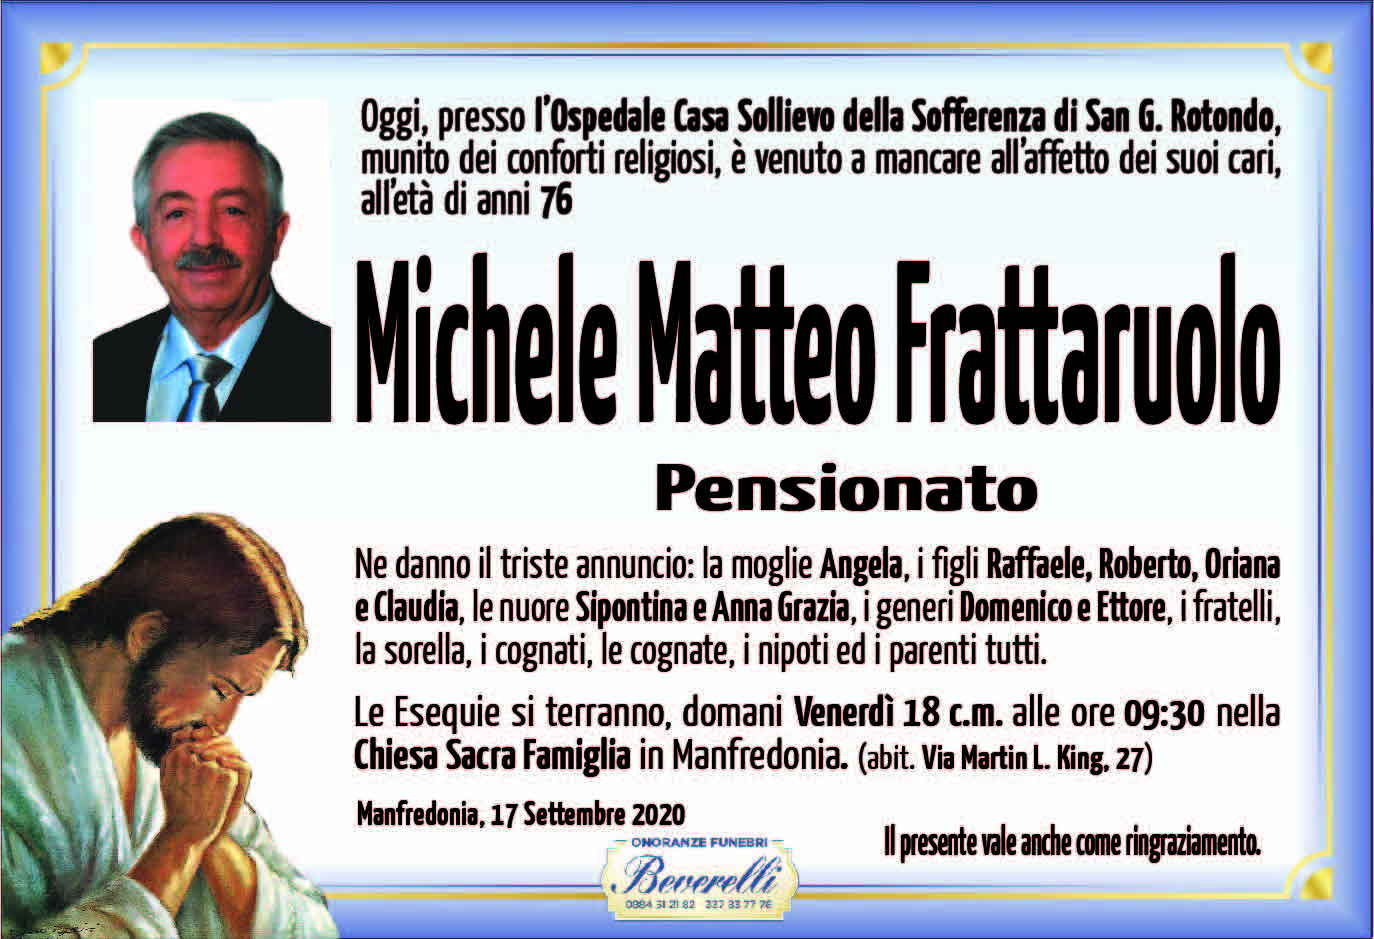 Michele Matteo Frattaruolo